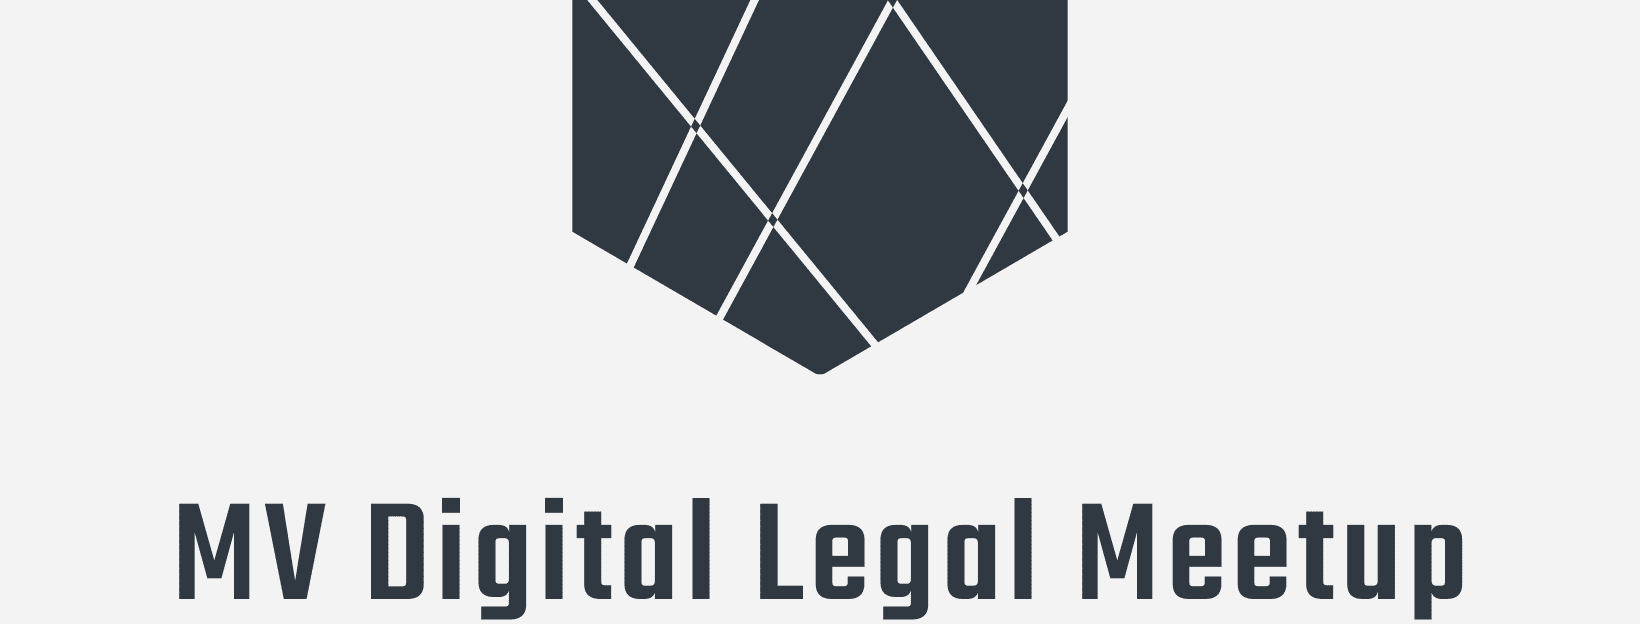 Logo Social Media Legal Meetup